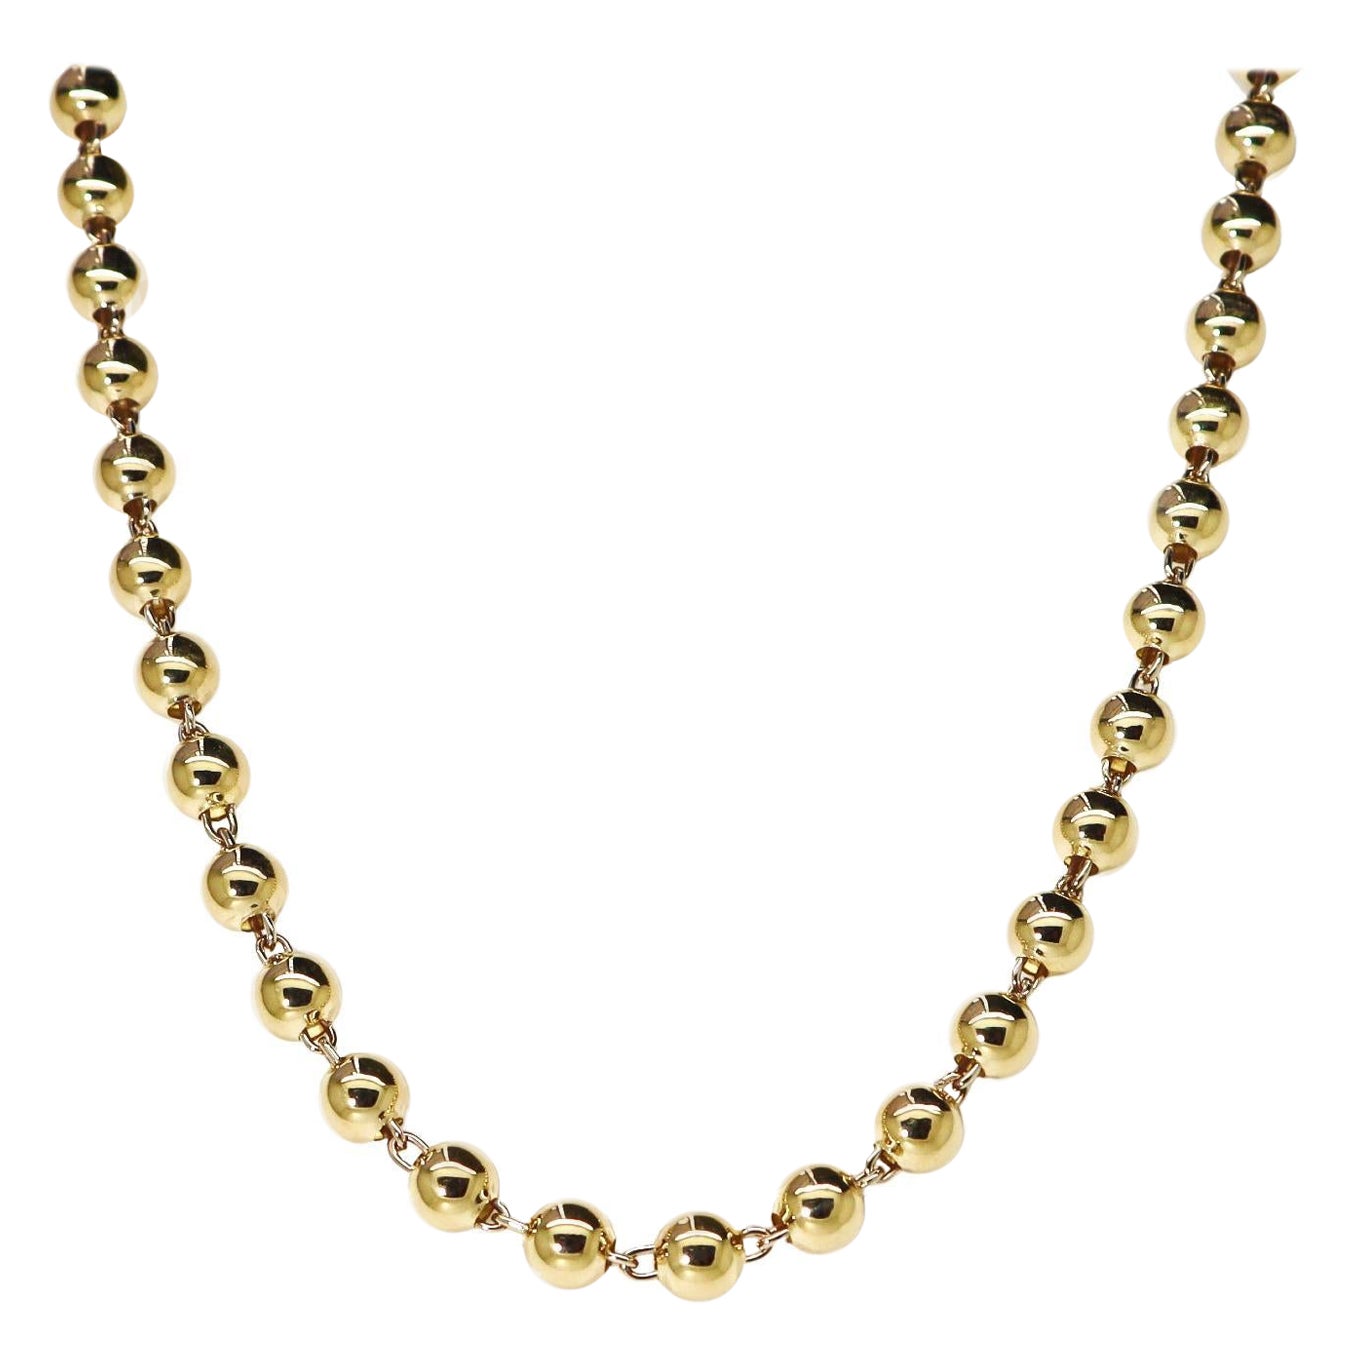 Maviada's Gold Ball Chain Necklace, 14k Gold For Sale